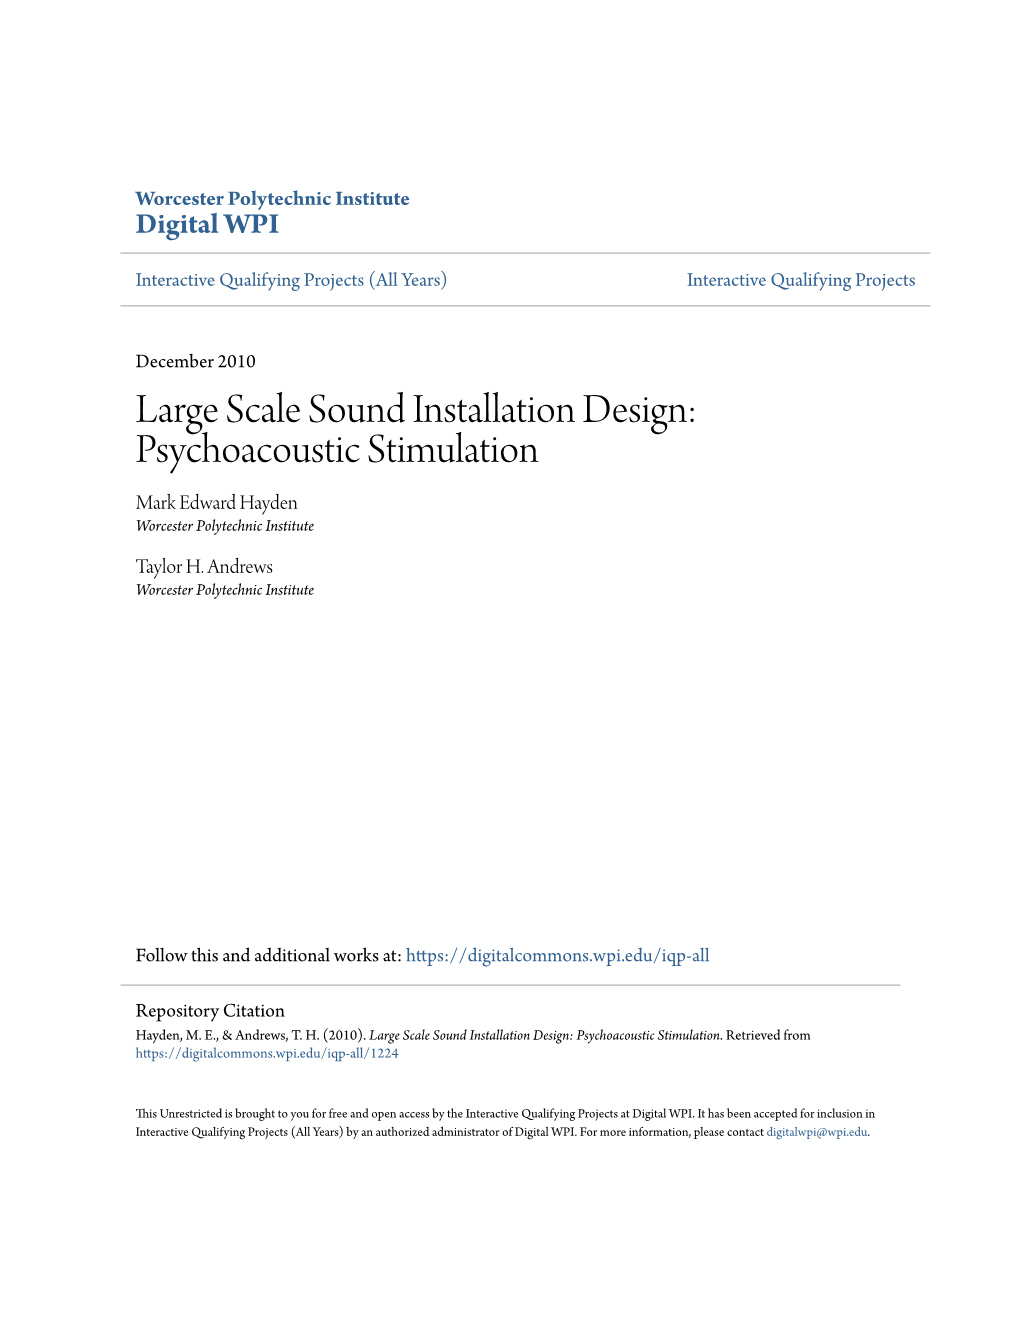 Large Scale Sound Installation Design: Psychoacoustic Stimulation Mark Edward Hayden Worcester Polytechnic Institute